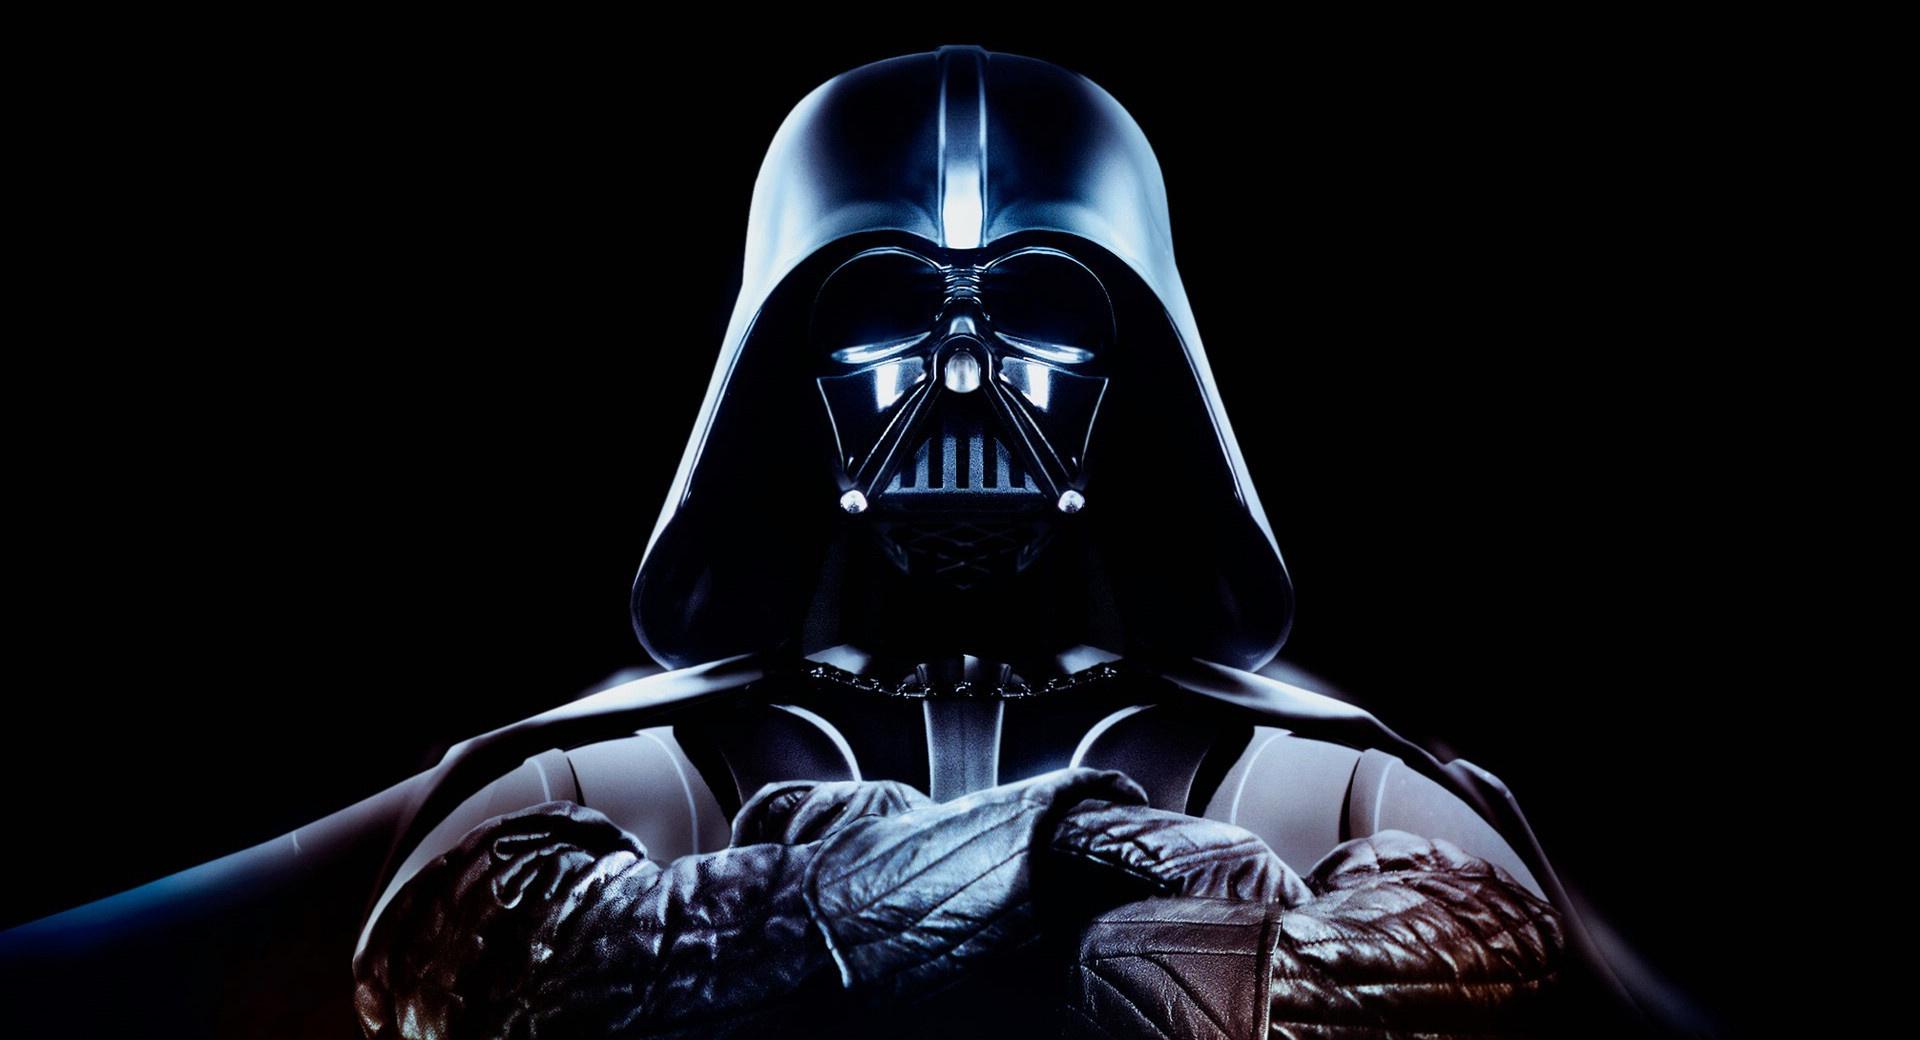 Darth Vader at 1024 x 1024 iPad size wallpapers HD quality